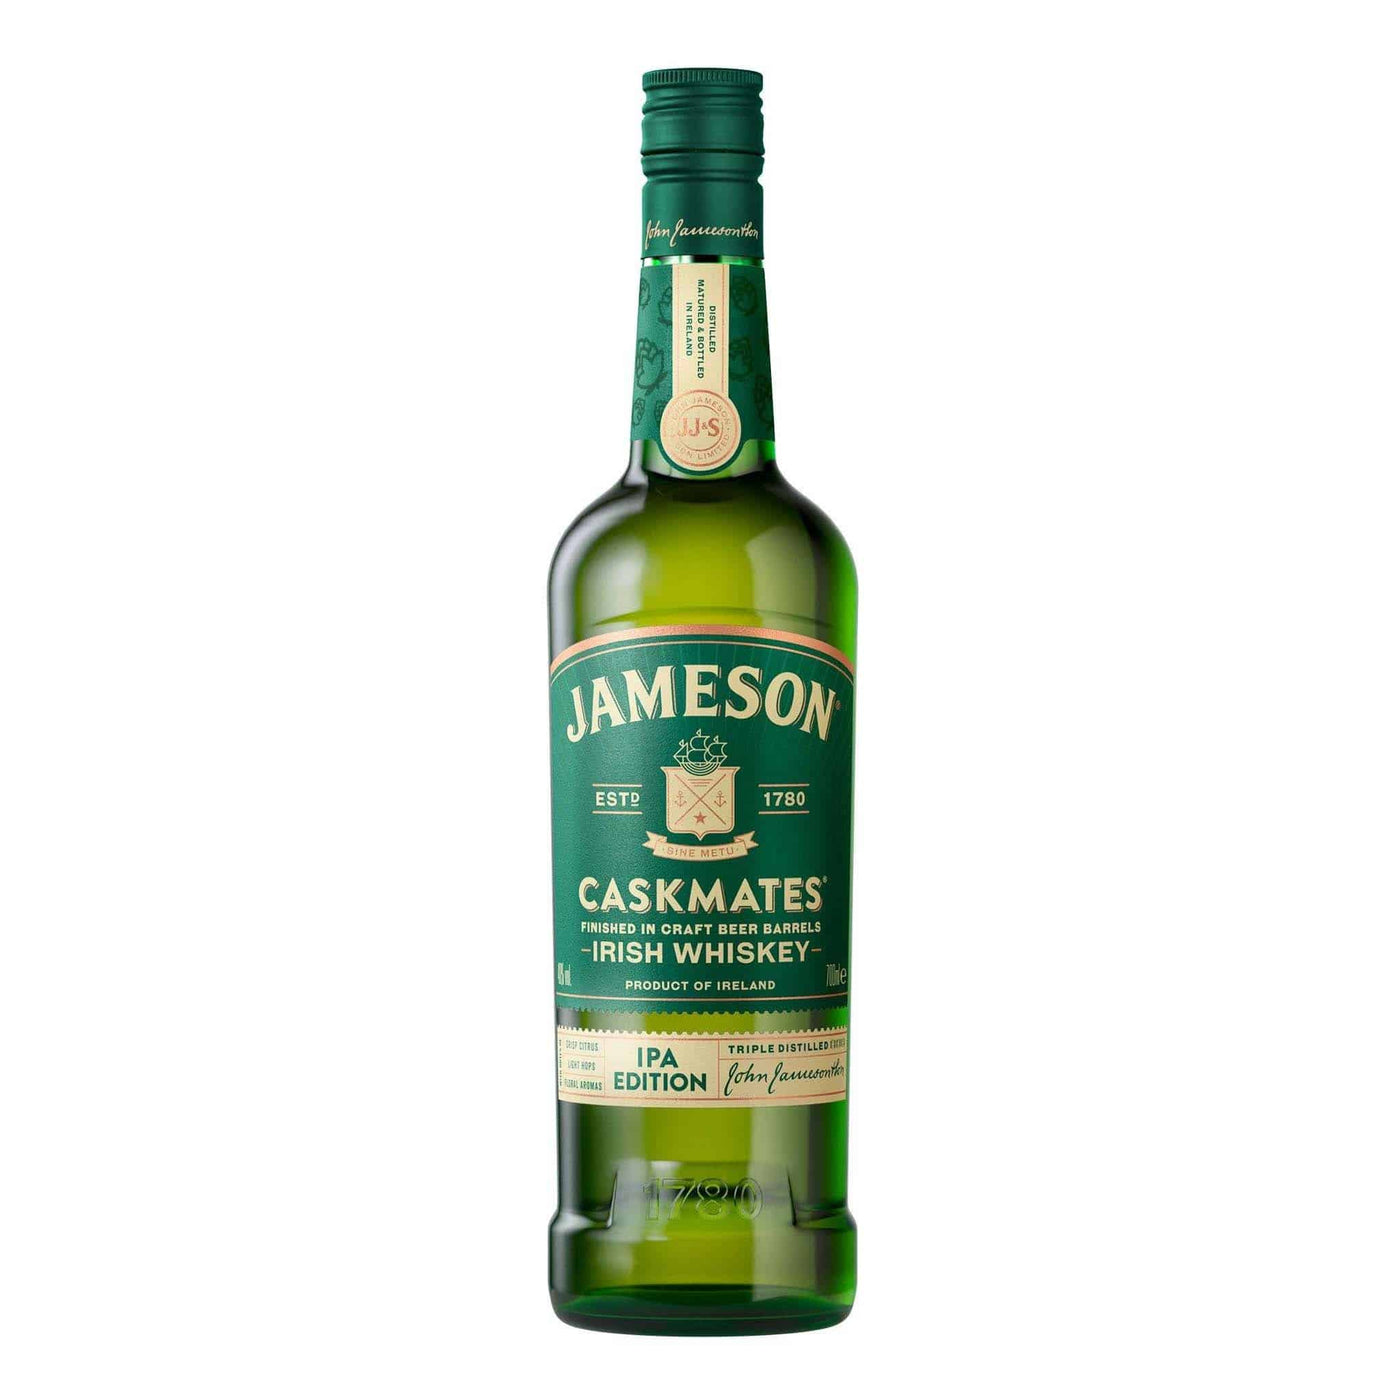 Jameson Caskmates IPA Whiskey - Spiritly